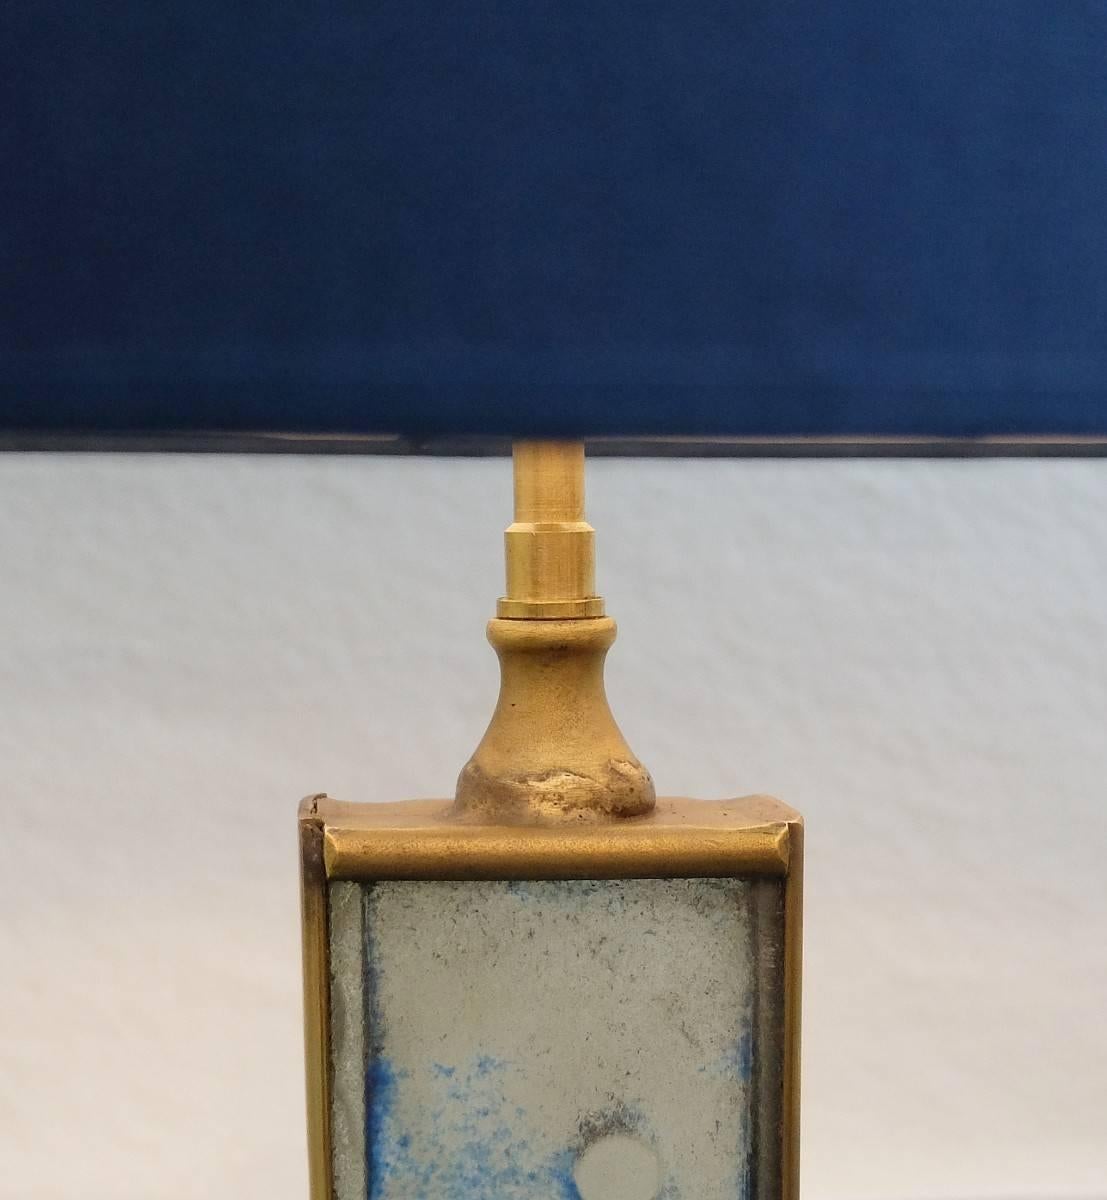 Brass and glass Italian floor lamp, circa 1950s.